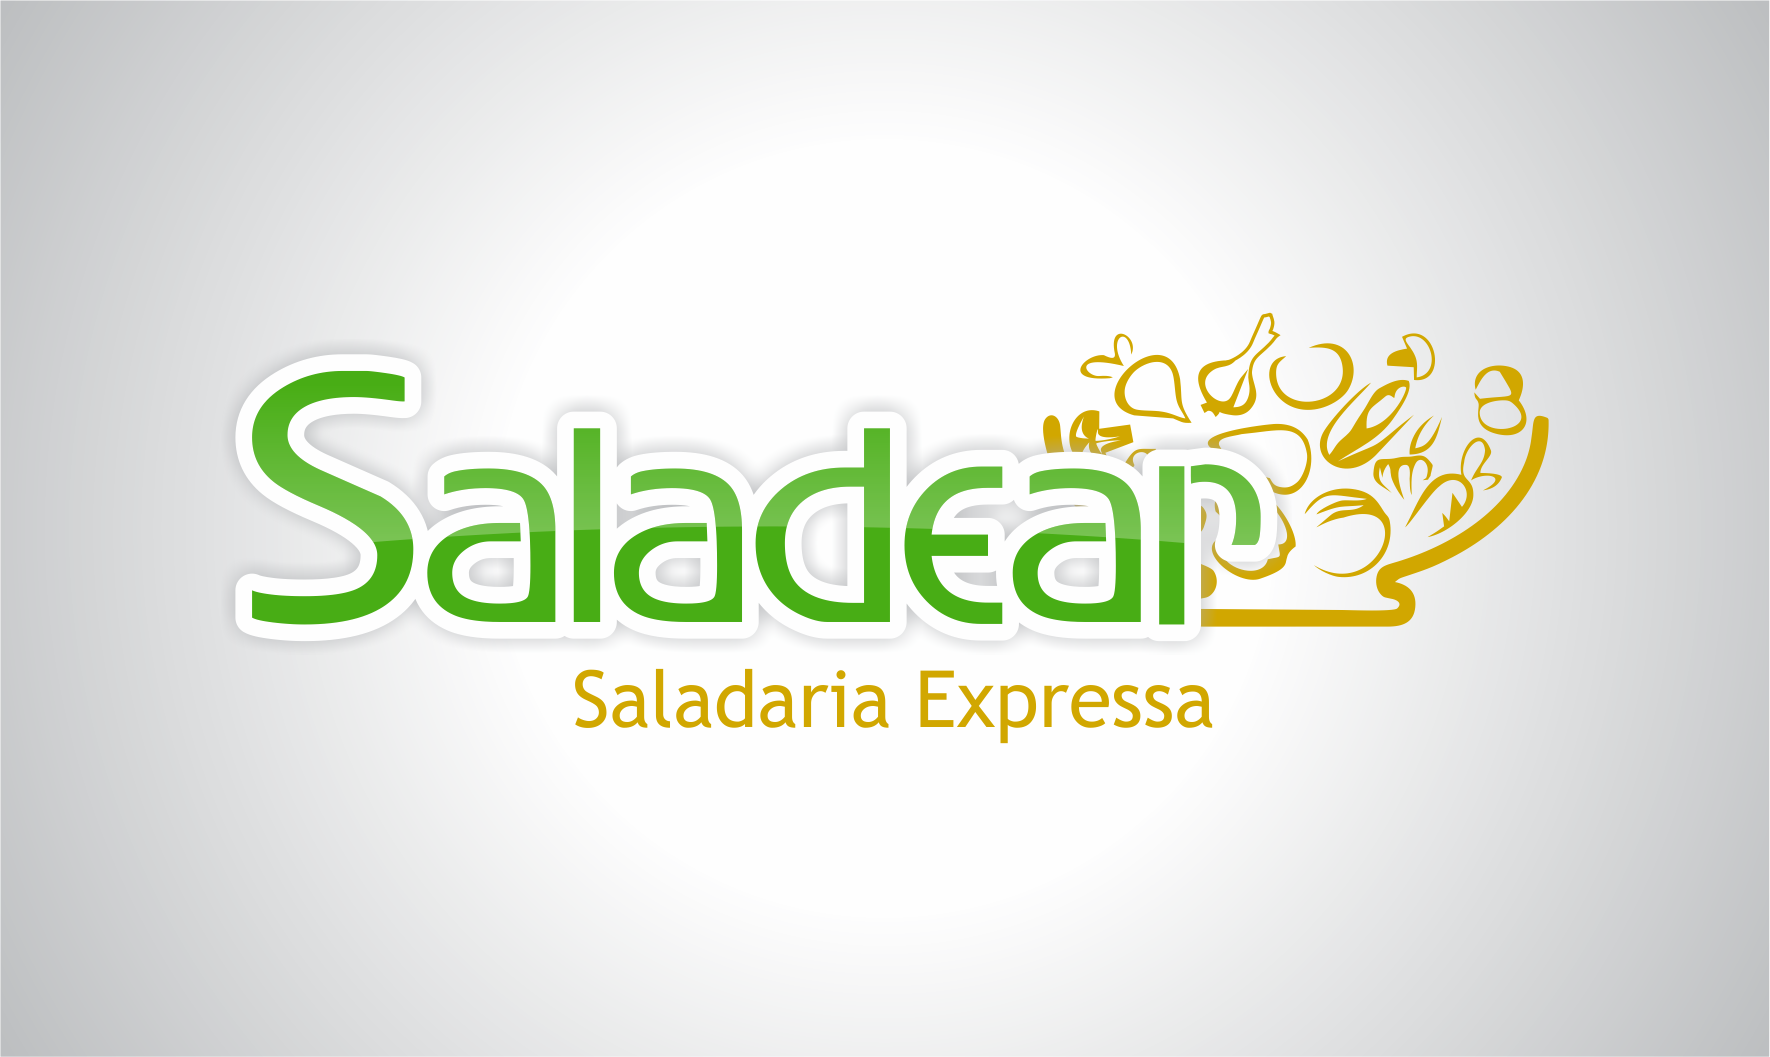 Saladear Saladaria Expressa logo